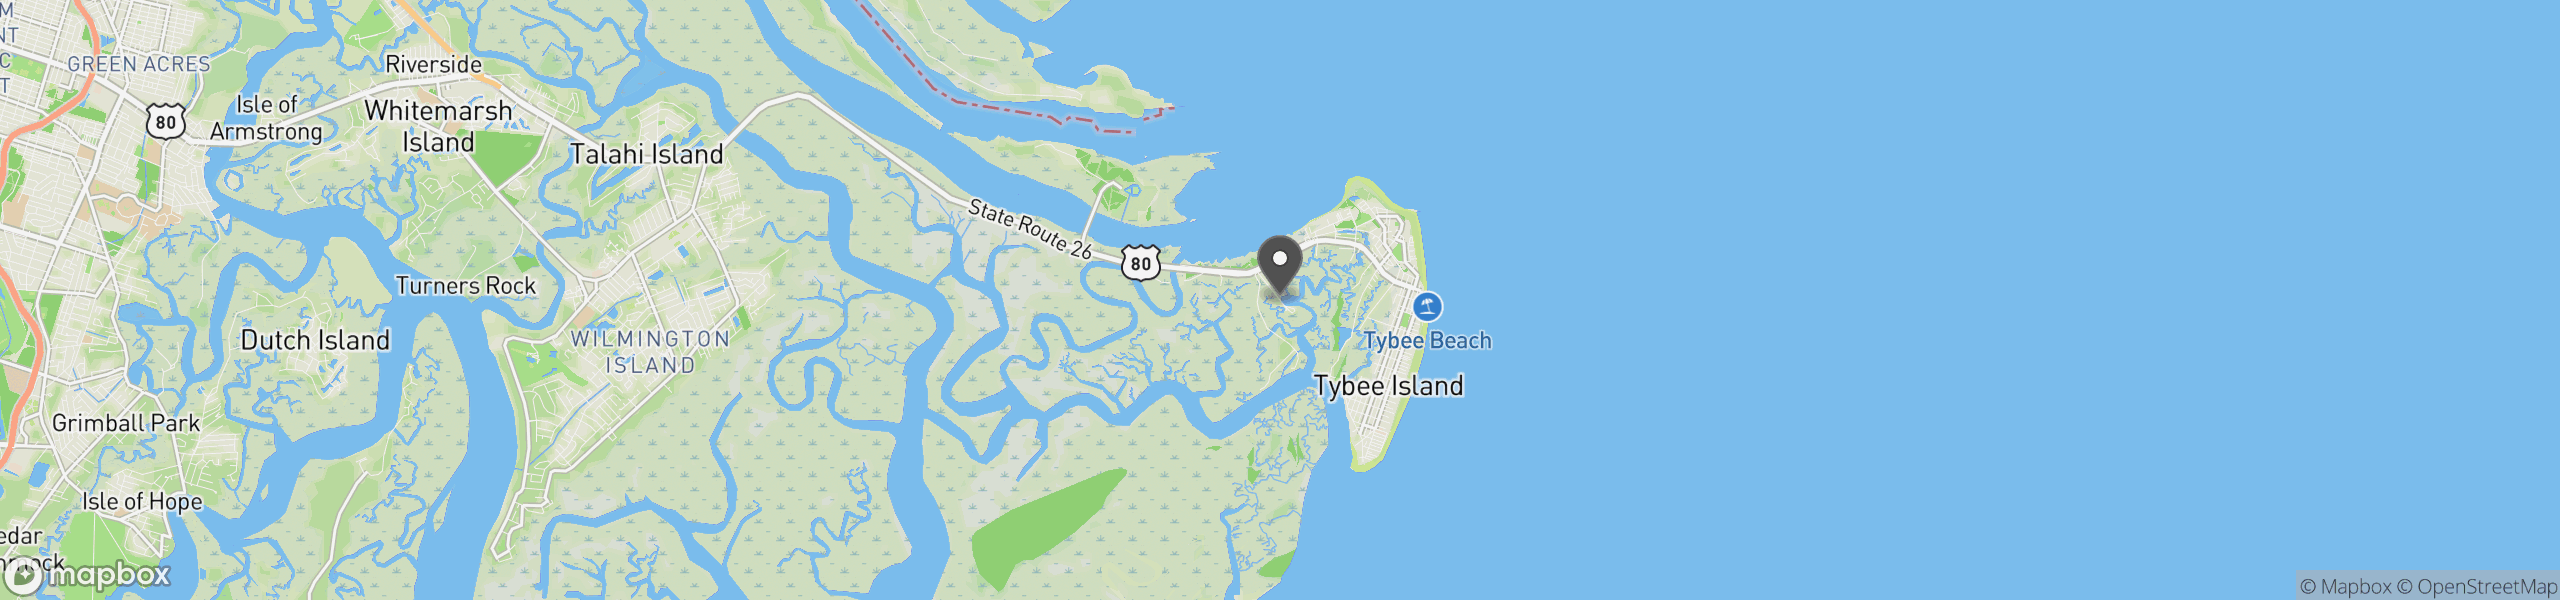 Tybee Island, GA 31328